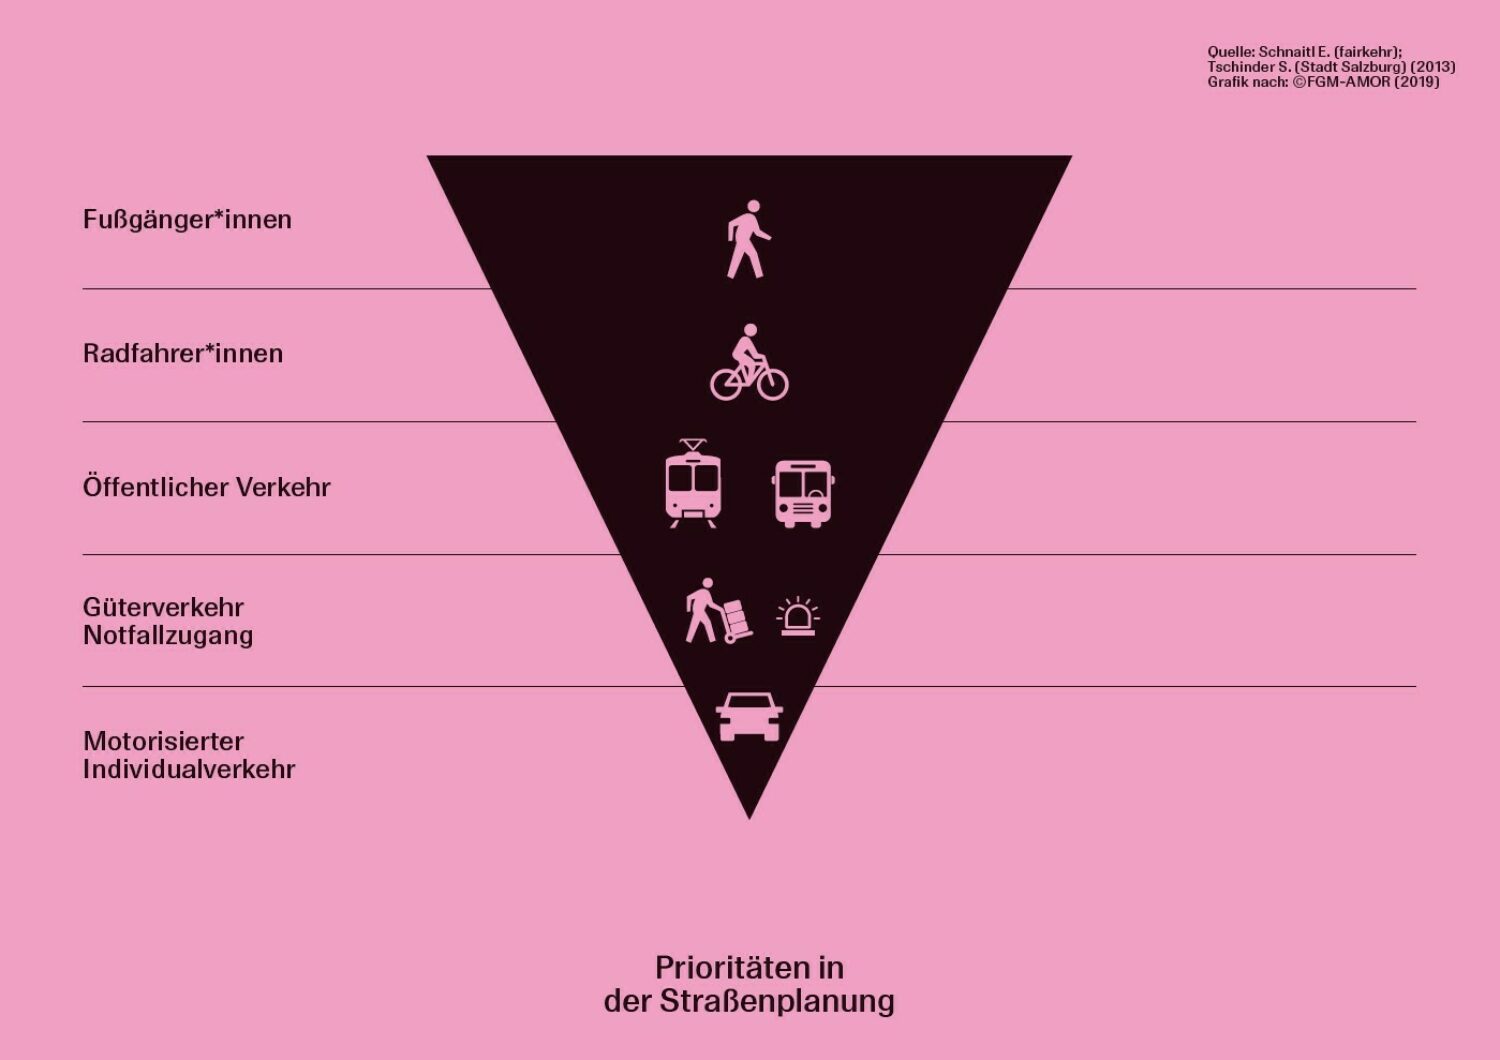 Mobilitätspyramide
Grafik: Kunsthaus Graz/studio itzo nach FGM-AMOR